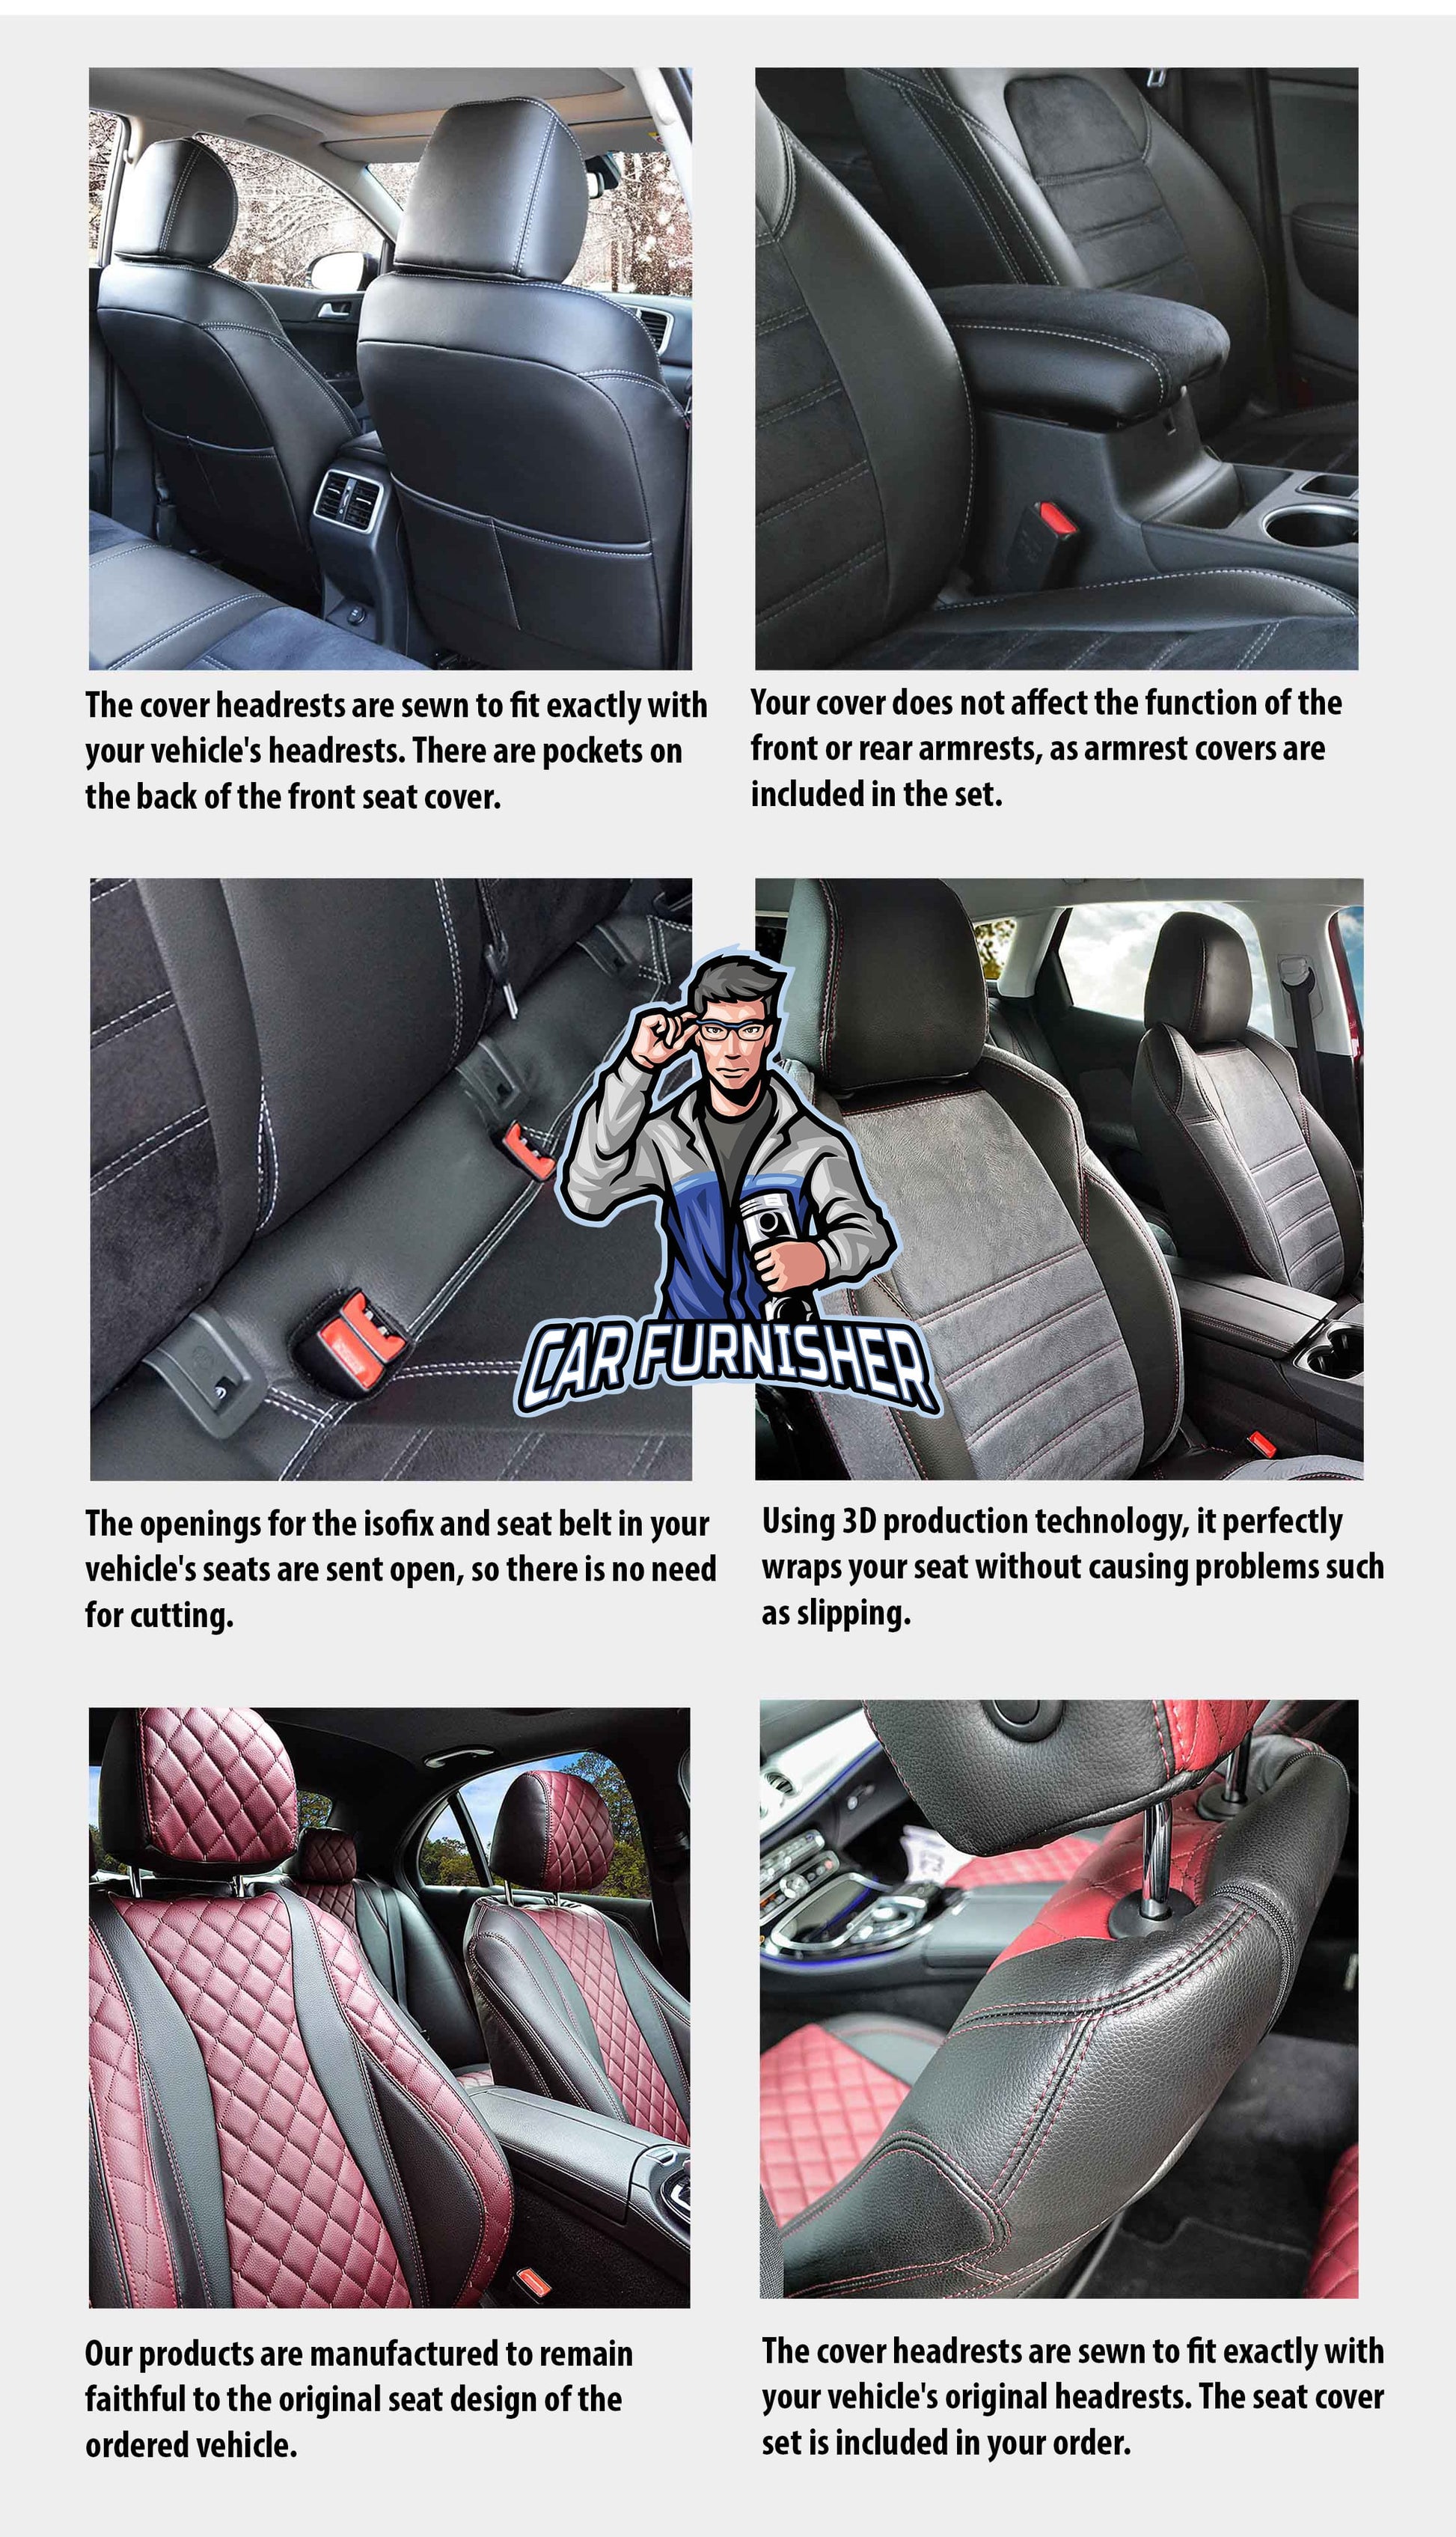 Volkswagen Scirocco Seat Cover Amsterdam Leather Design Black Leather